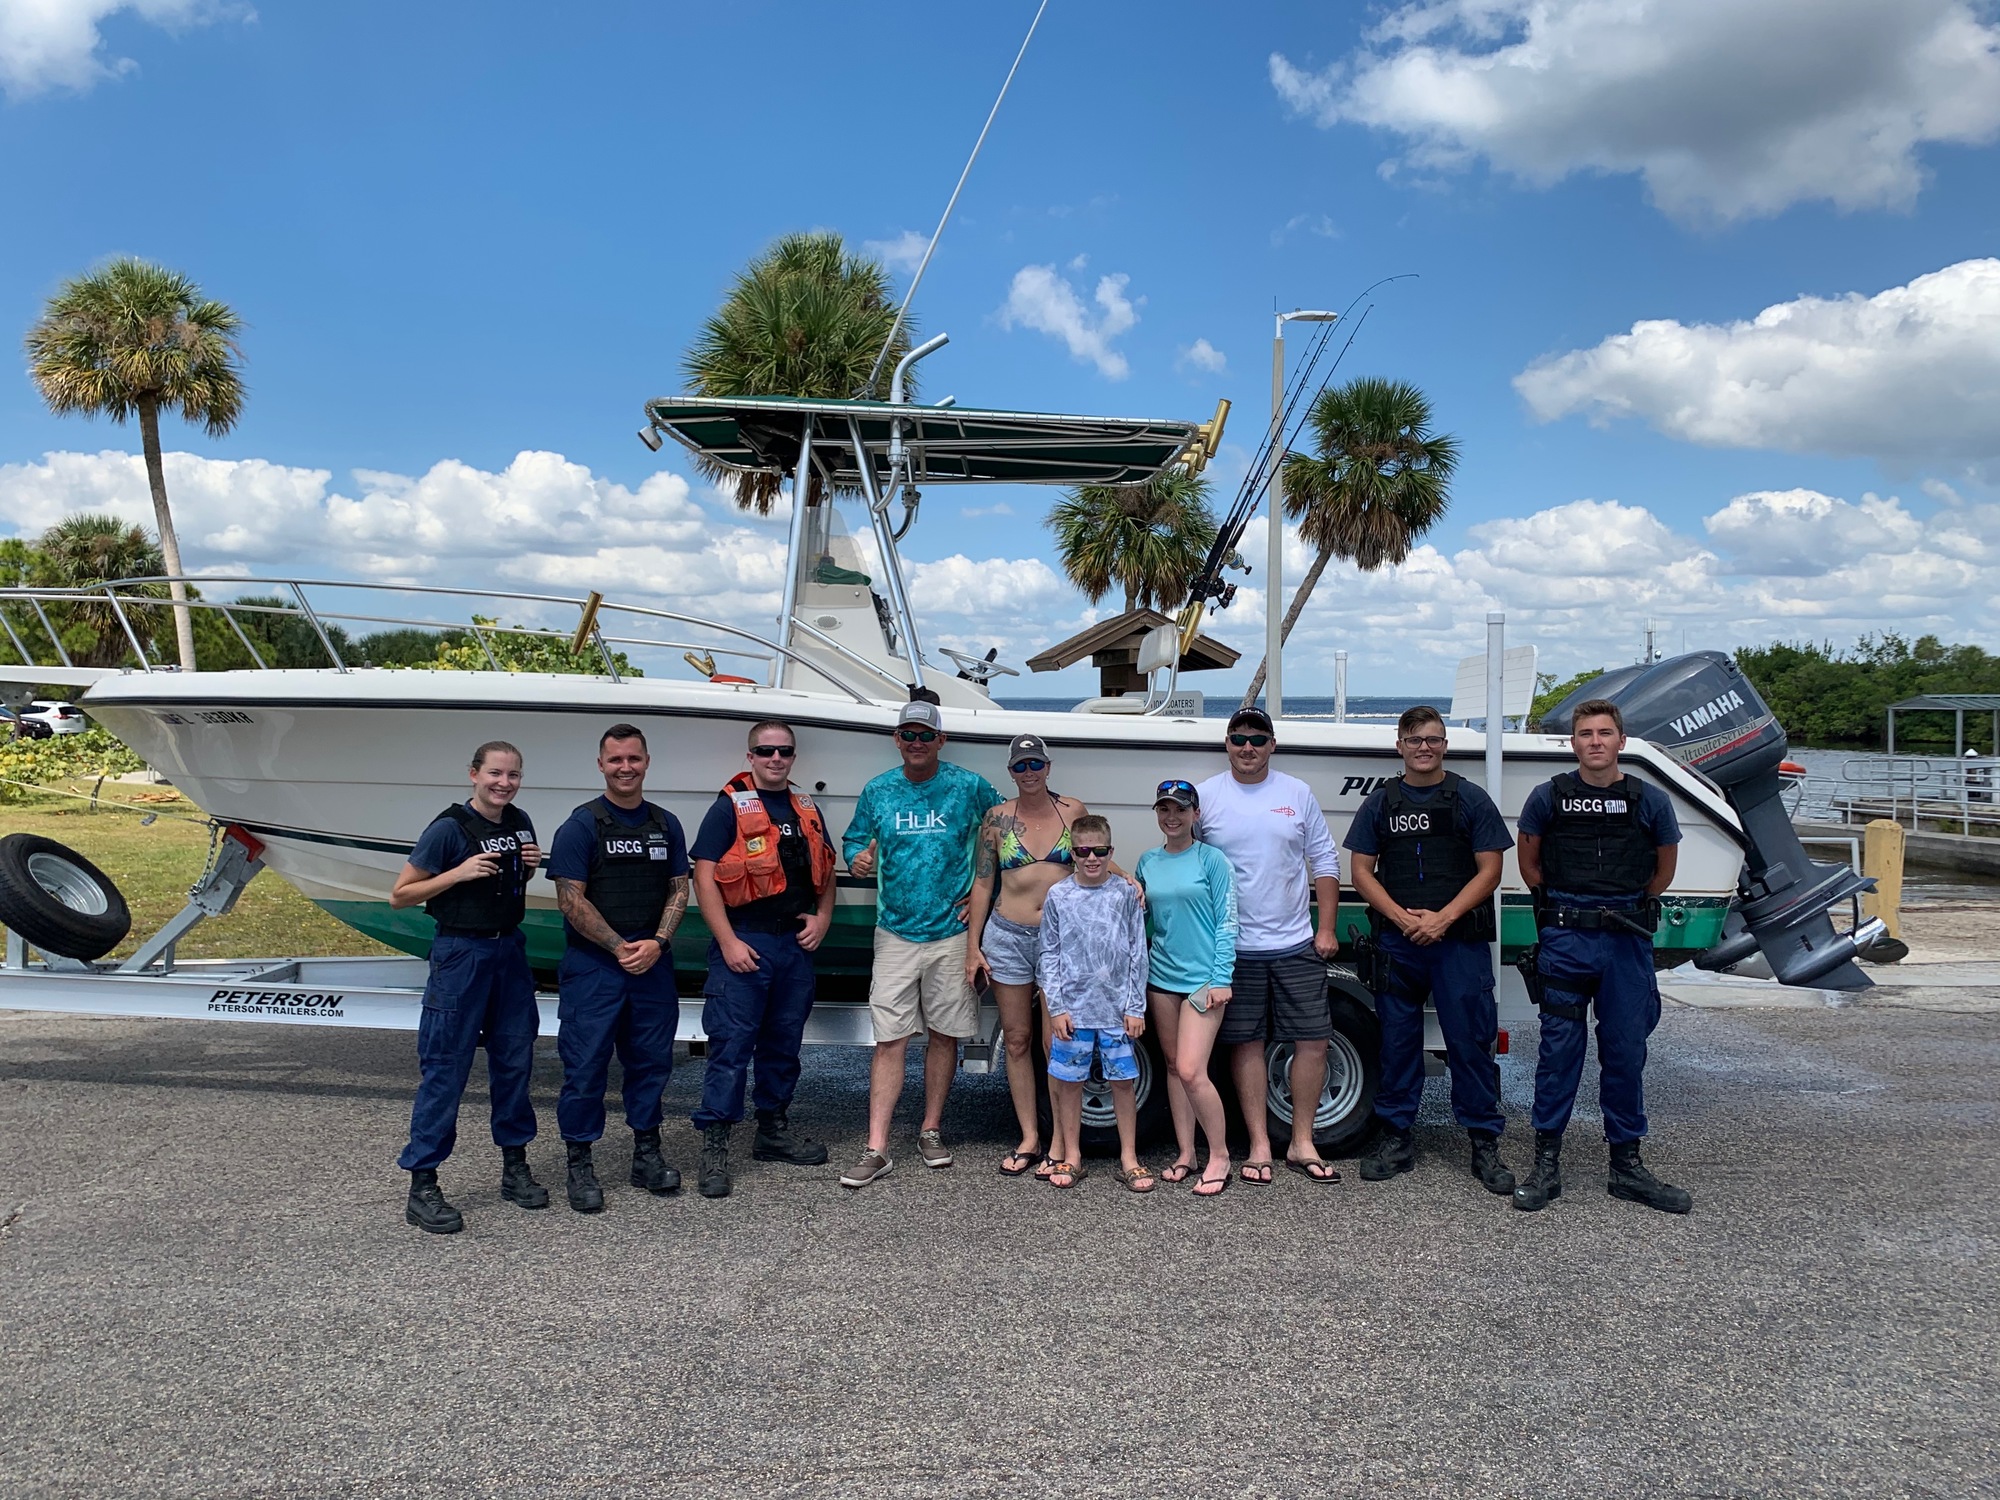 Coast Guard assists five near Tampa Bay Skyway Bridge